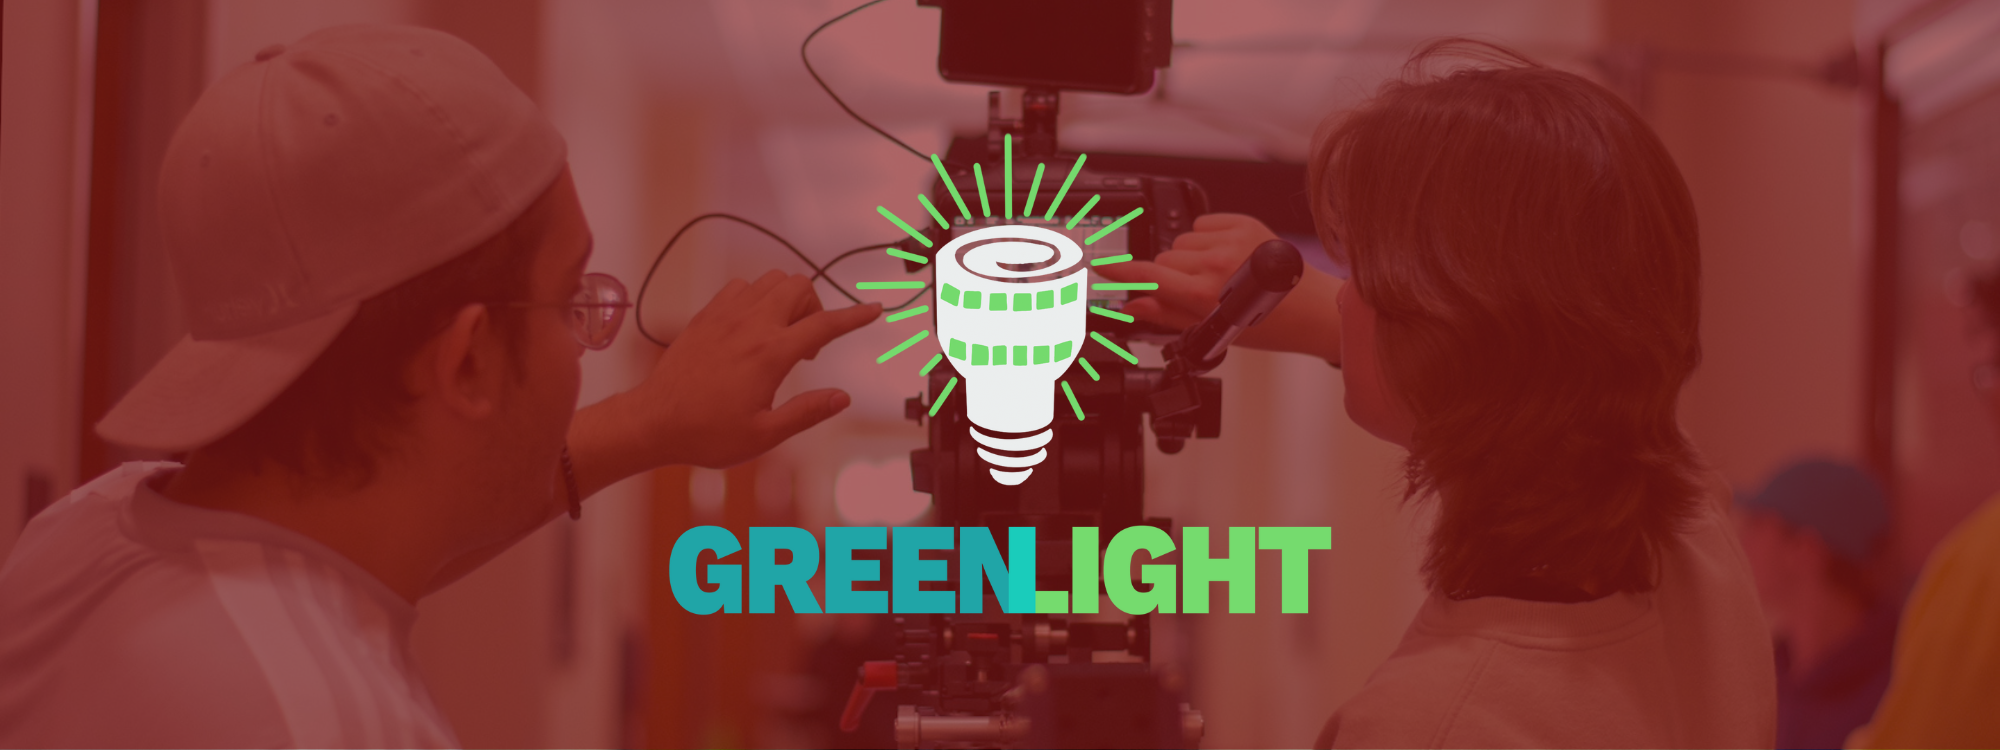 Greenlight Production logo overlaying production photo. 